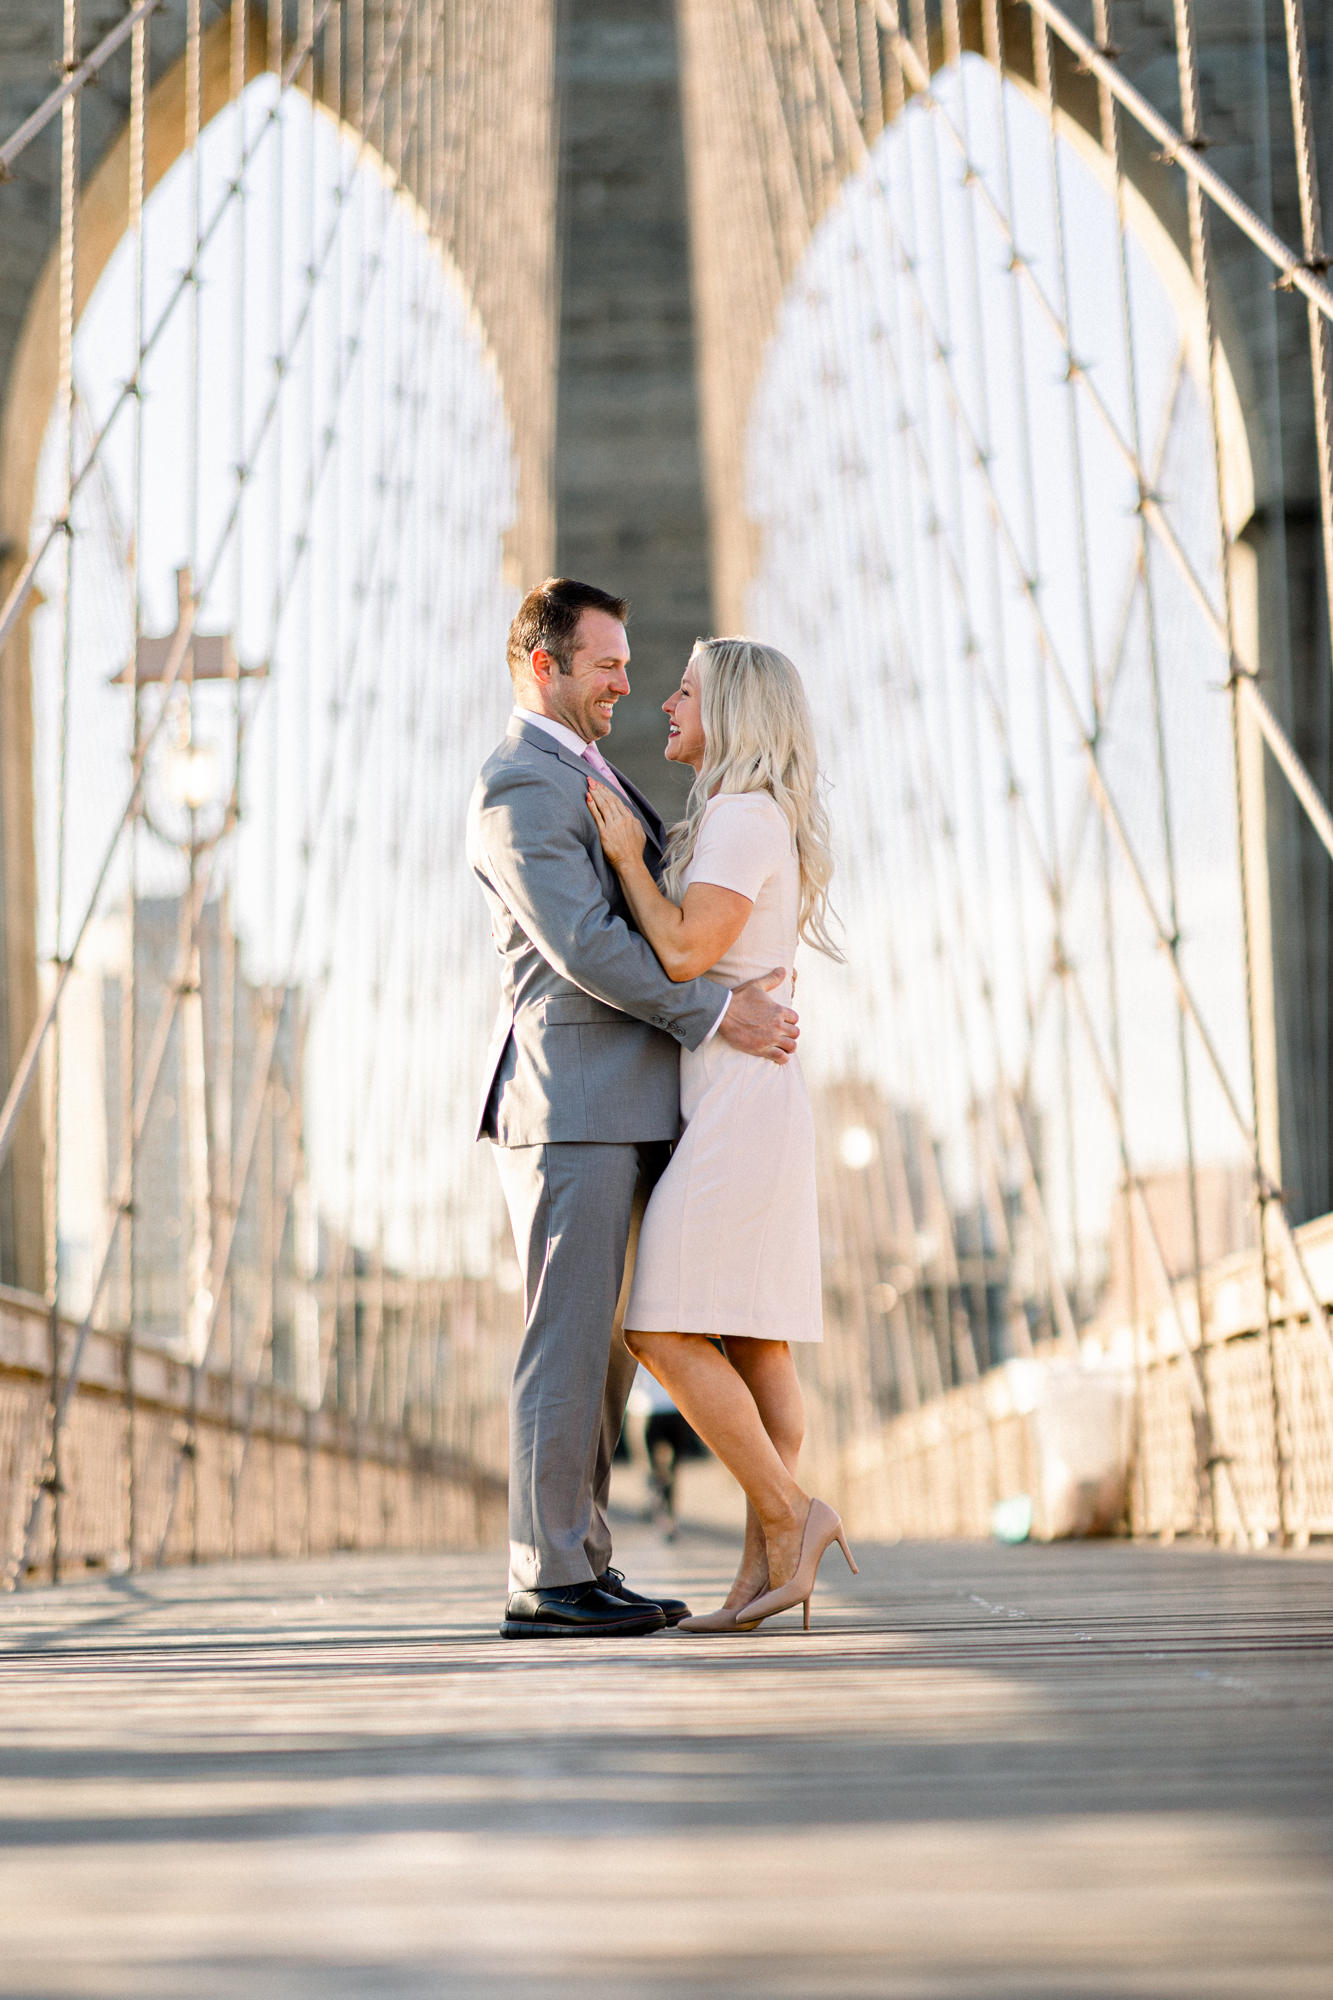 Charming New York Engagement Photos on the Brooklyn Bridge